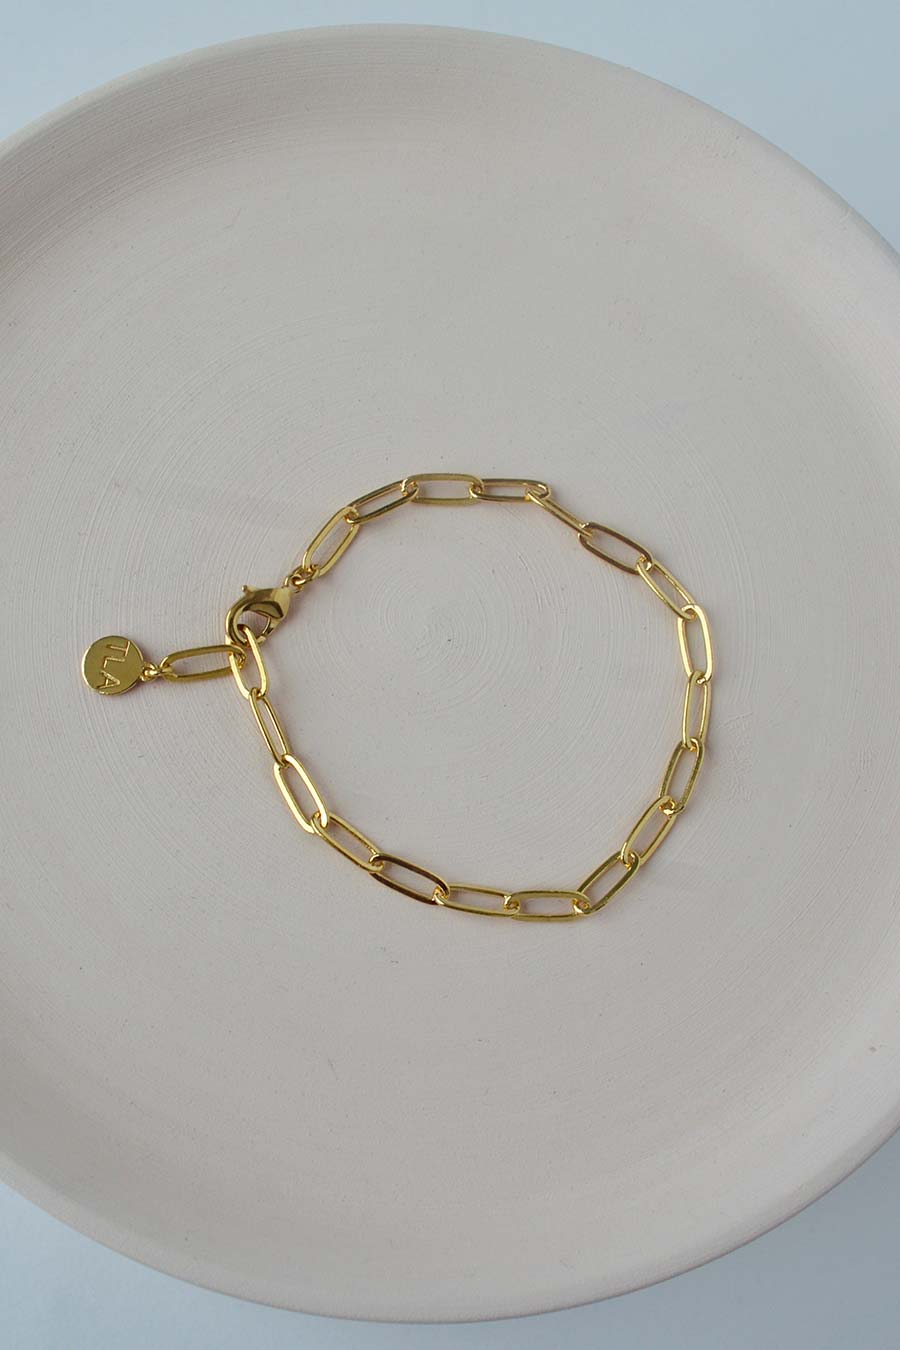 Linked Chain Bracelet